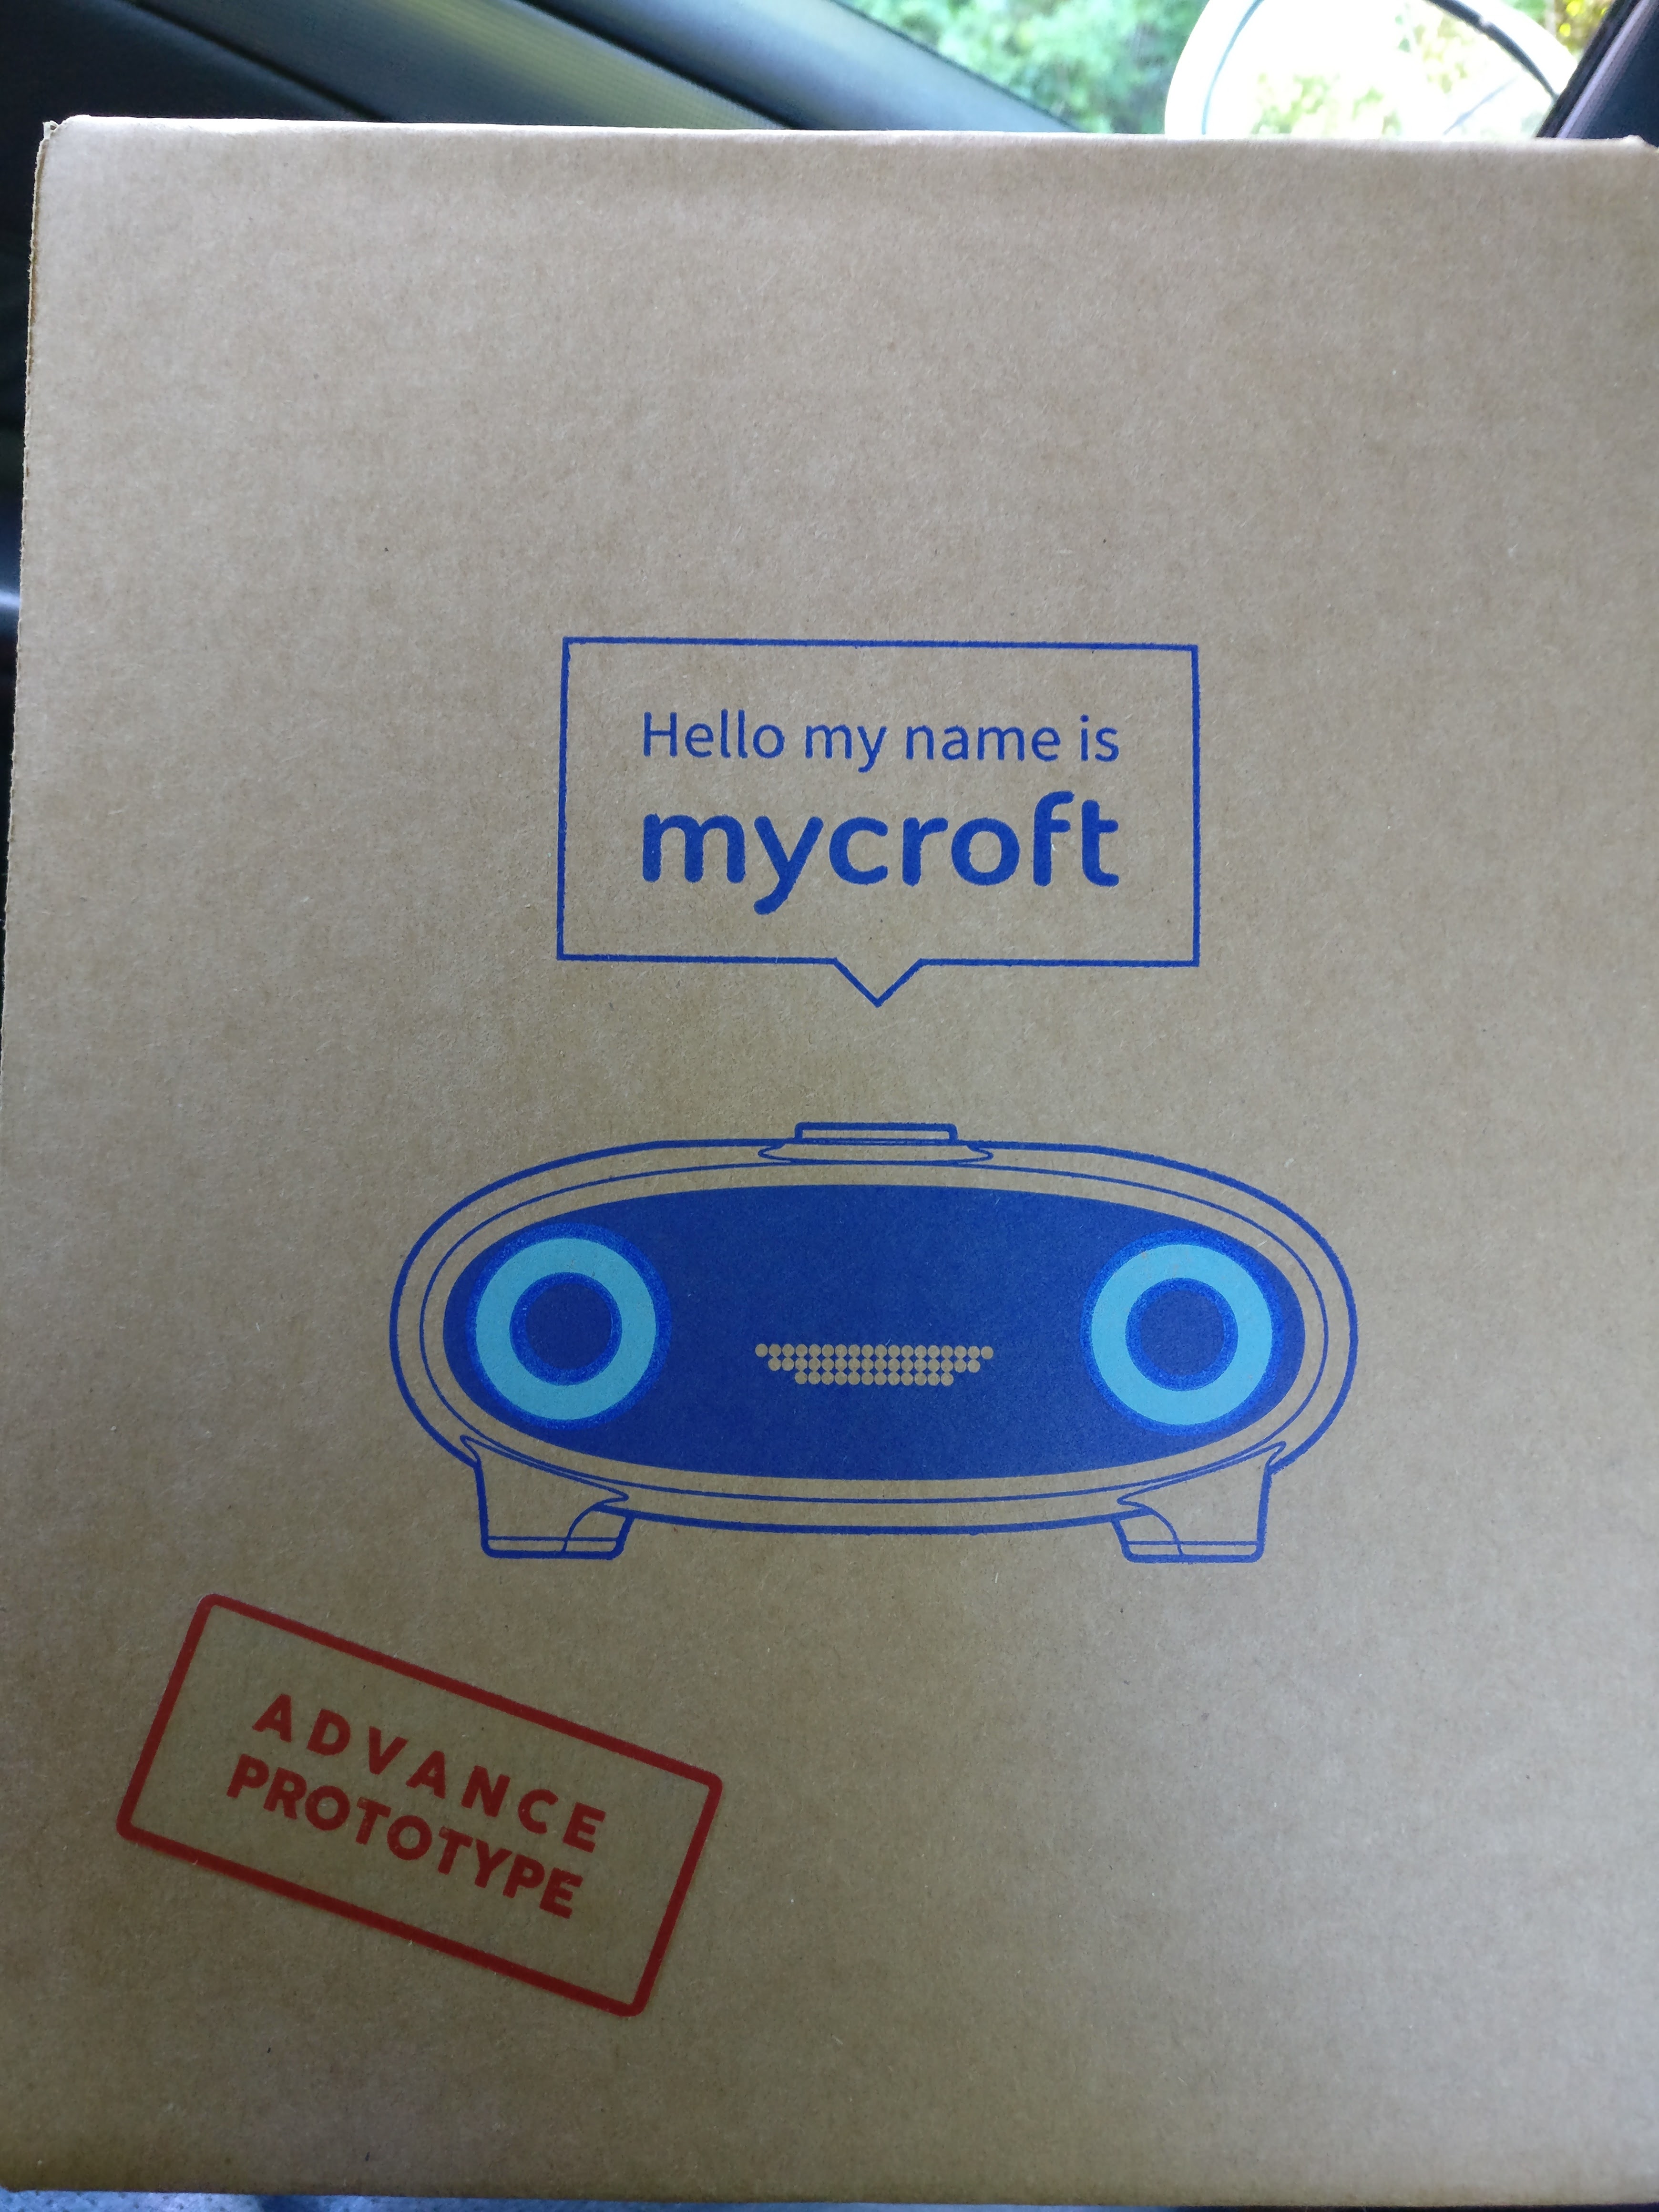 Mycroft AI box